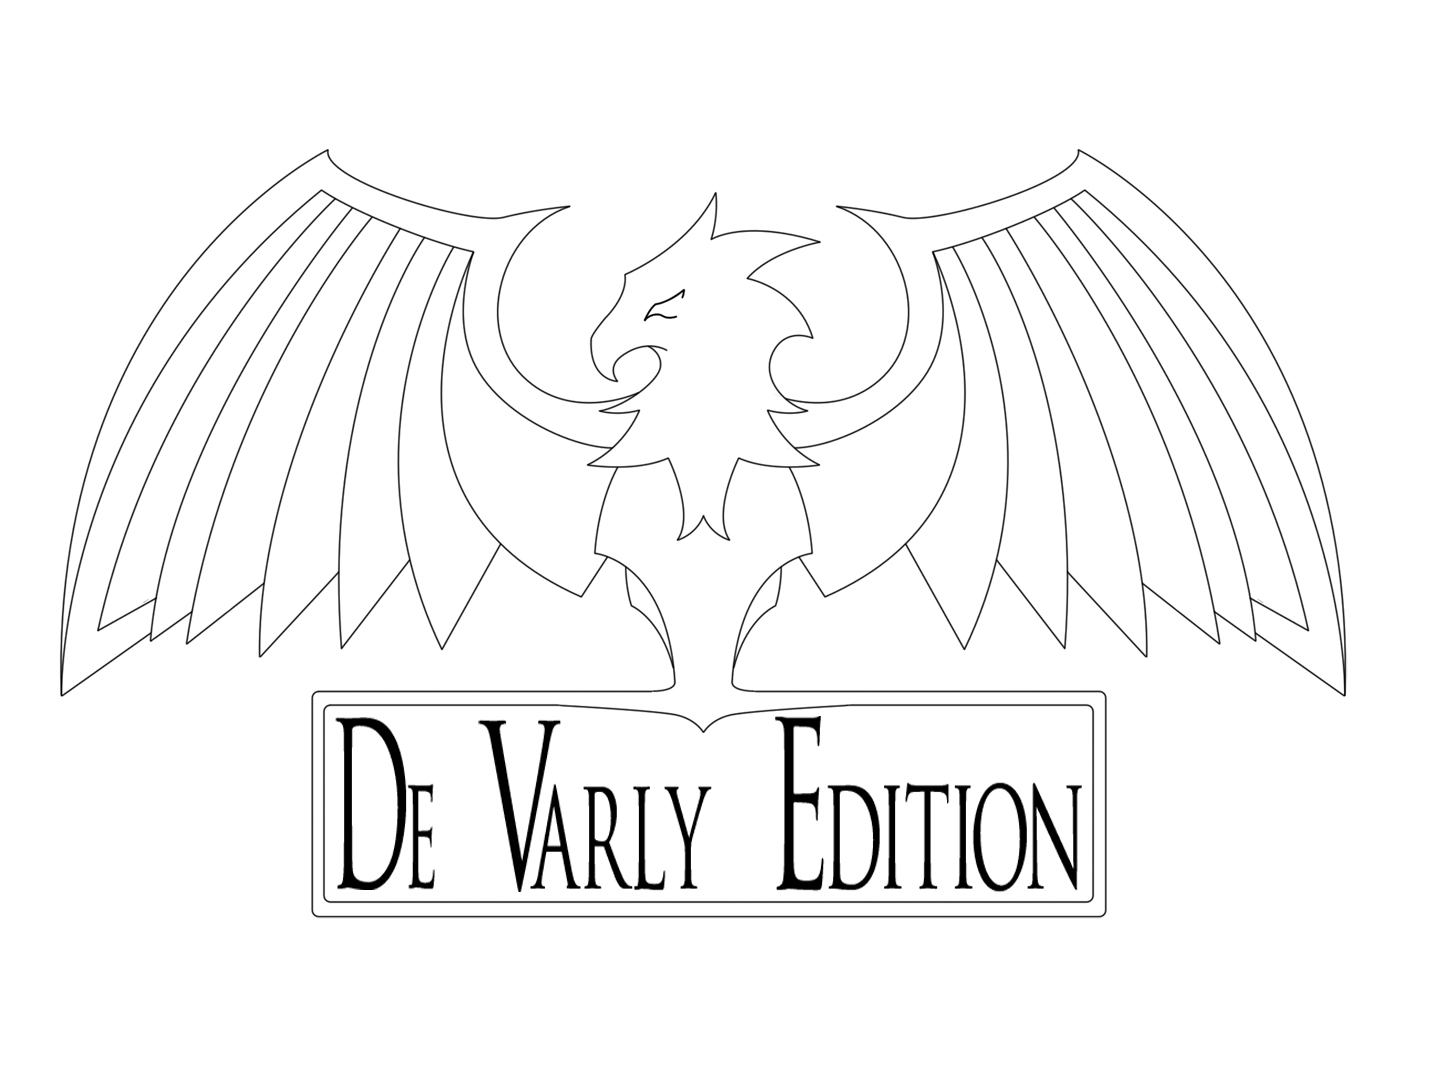 De Varly